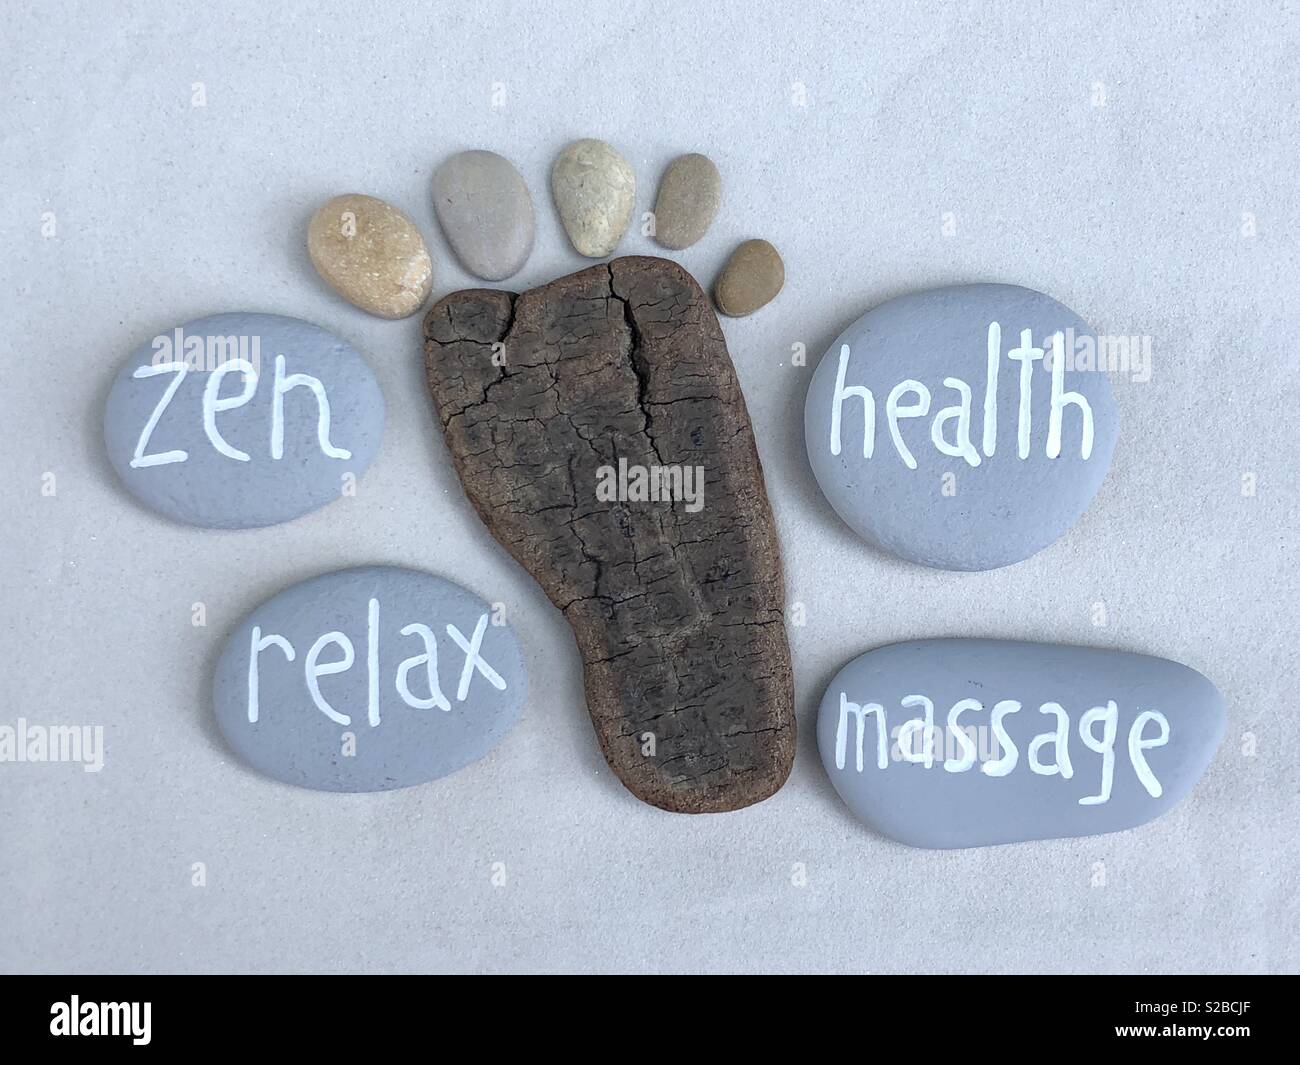 Zen,relax,health,massage Stock Photo